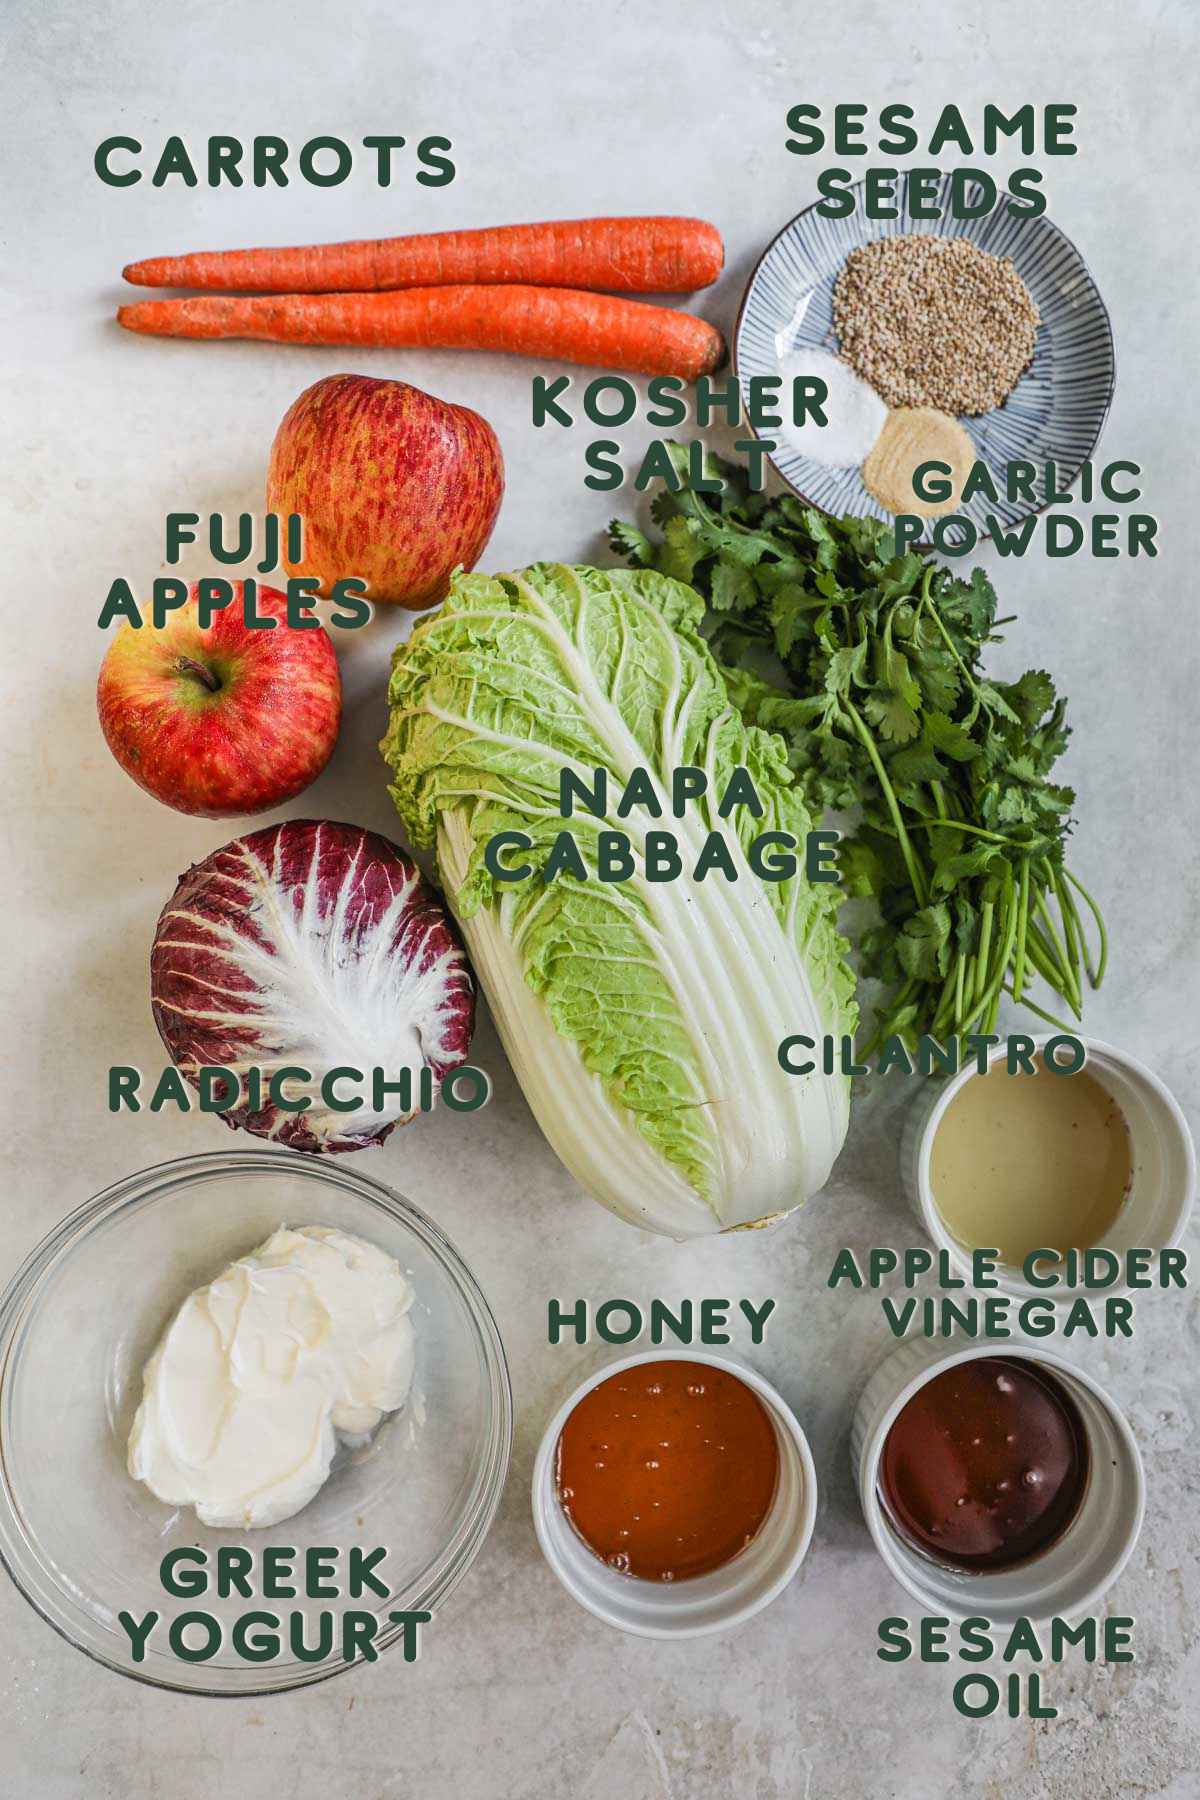 Ingredients to make asian coleslaw, napa cabbage, radicchio, apples, greek yogurt, honey, acv, sesame oil, carrots, cilantro, sesame seeds, garlic powder, kosher salt.